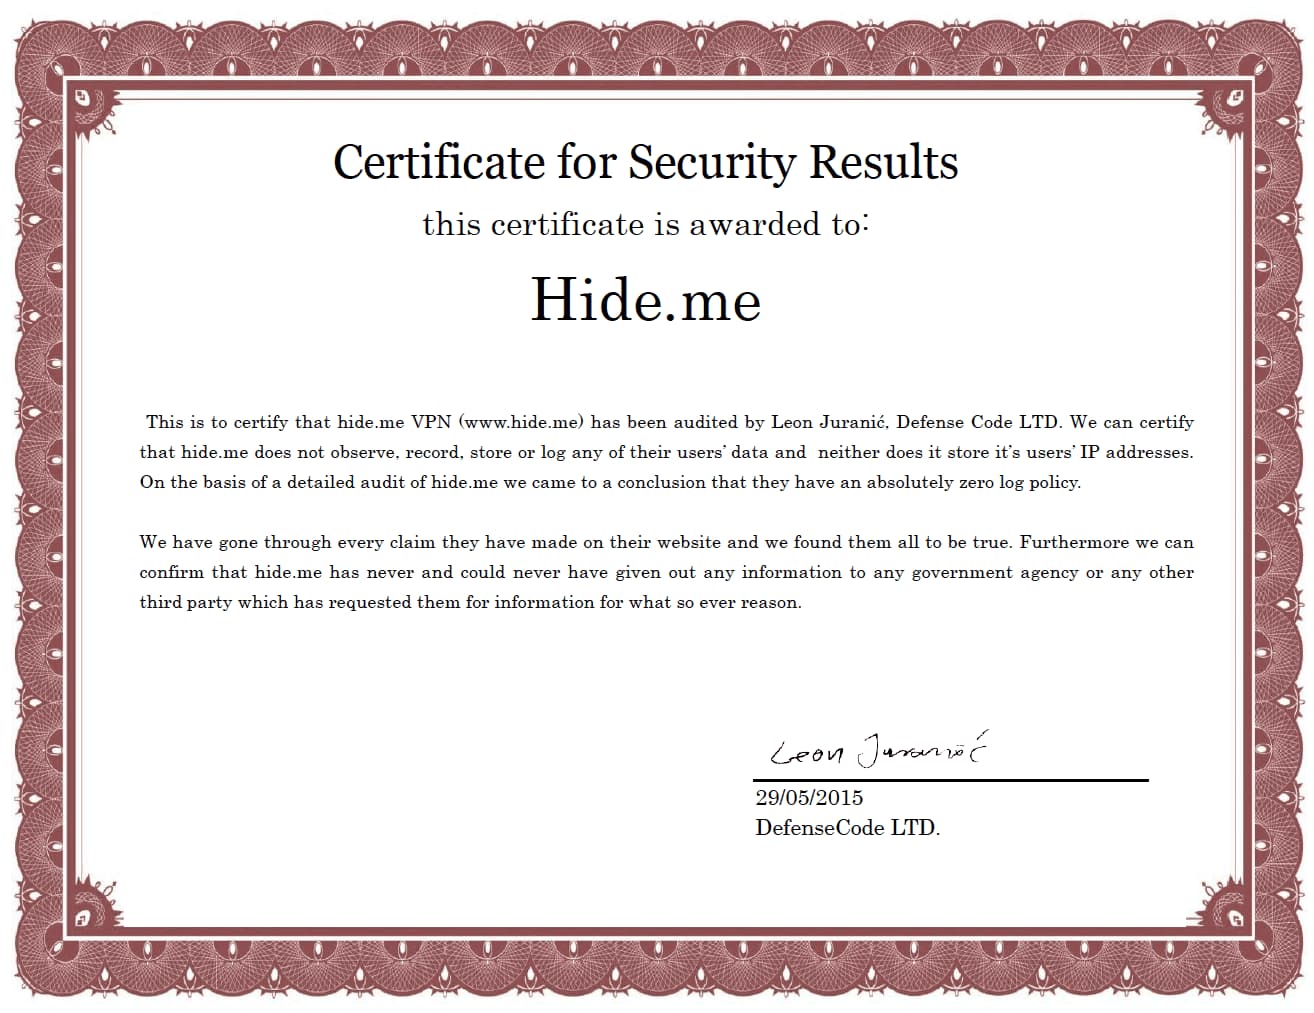 Hide.me Audit Certificate Awarded by DefenseCode Ltd